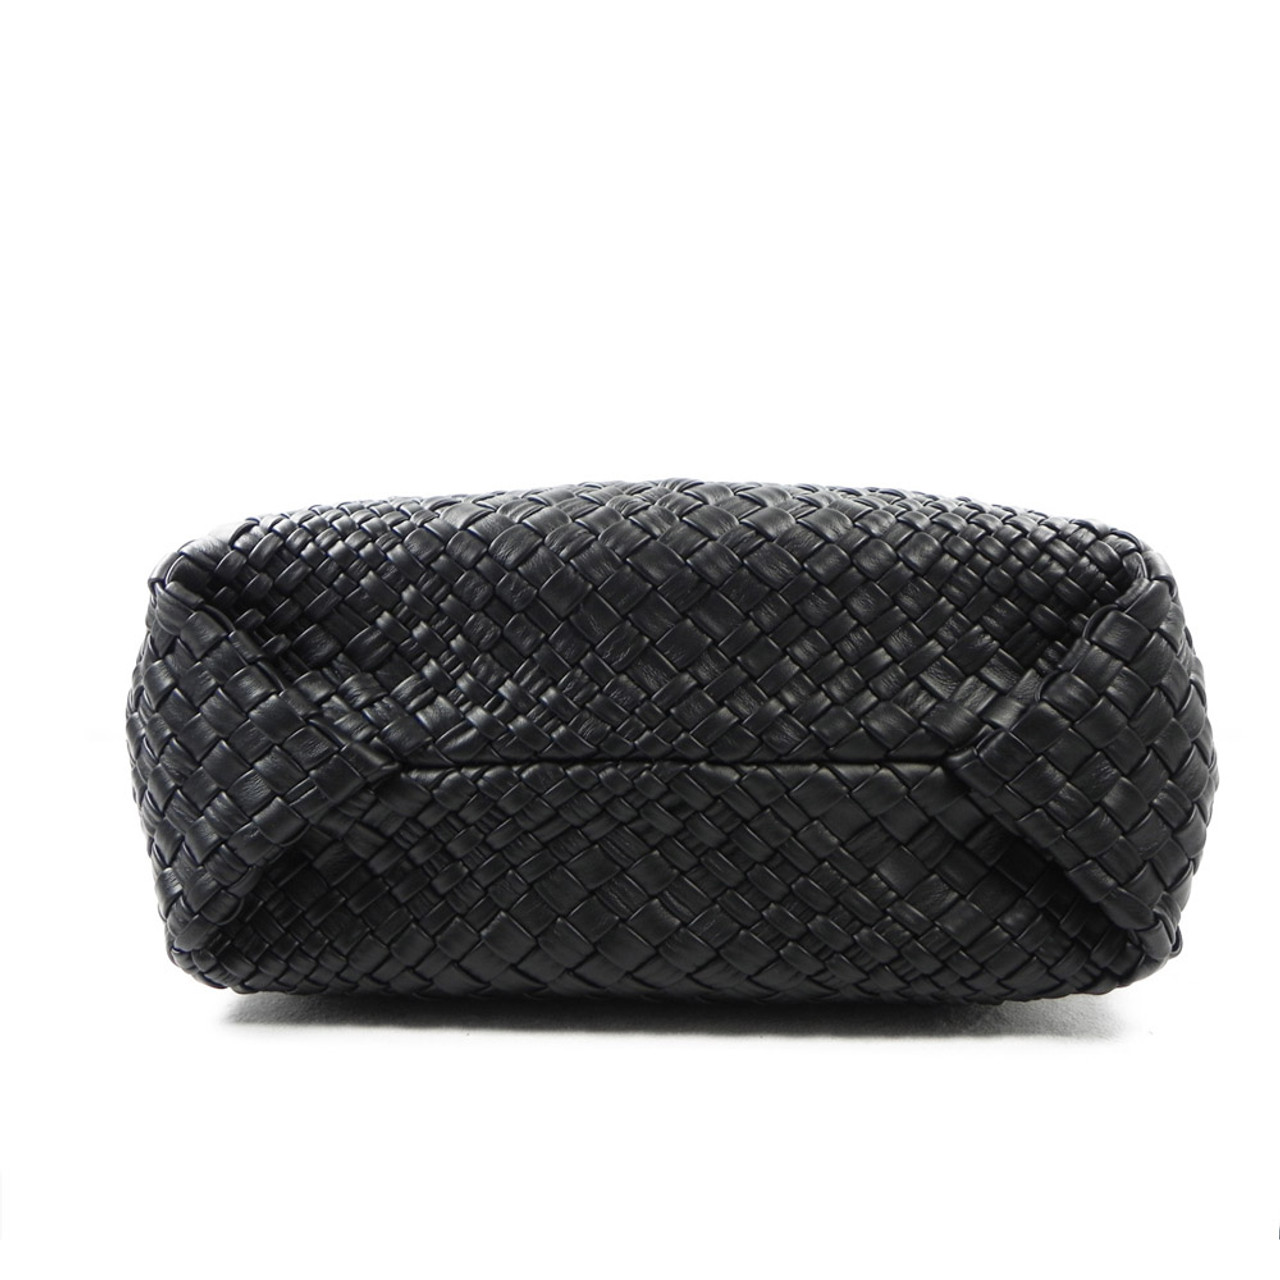 Ghibli Woven Leather Medium Grab Bag